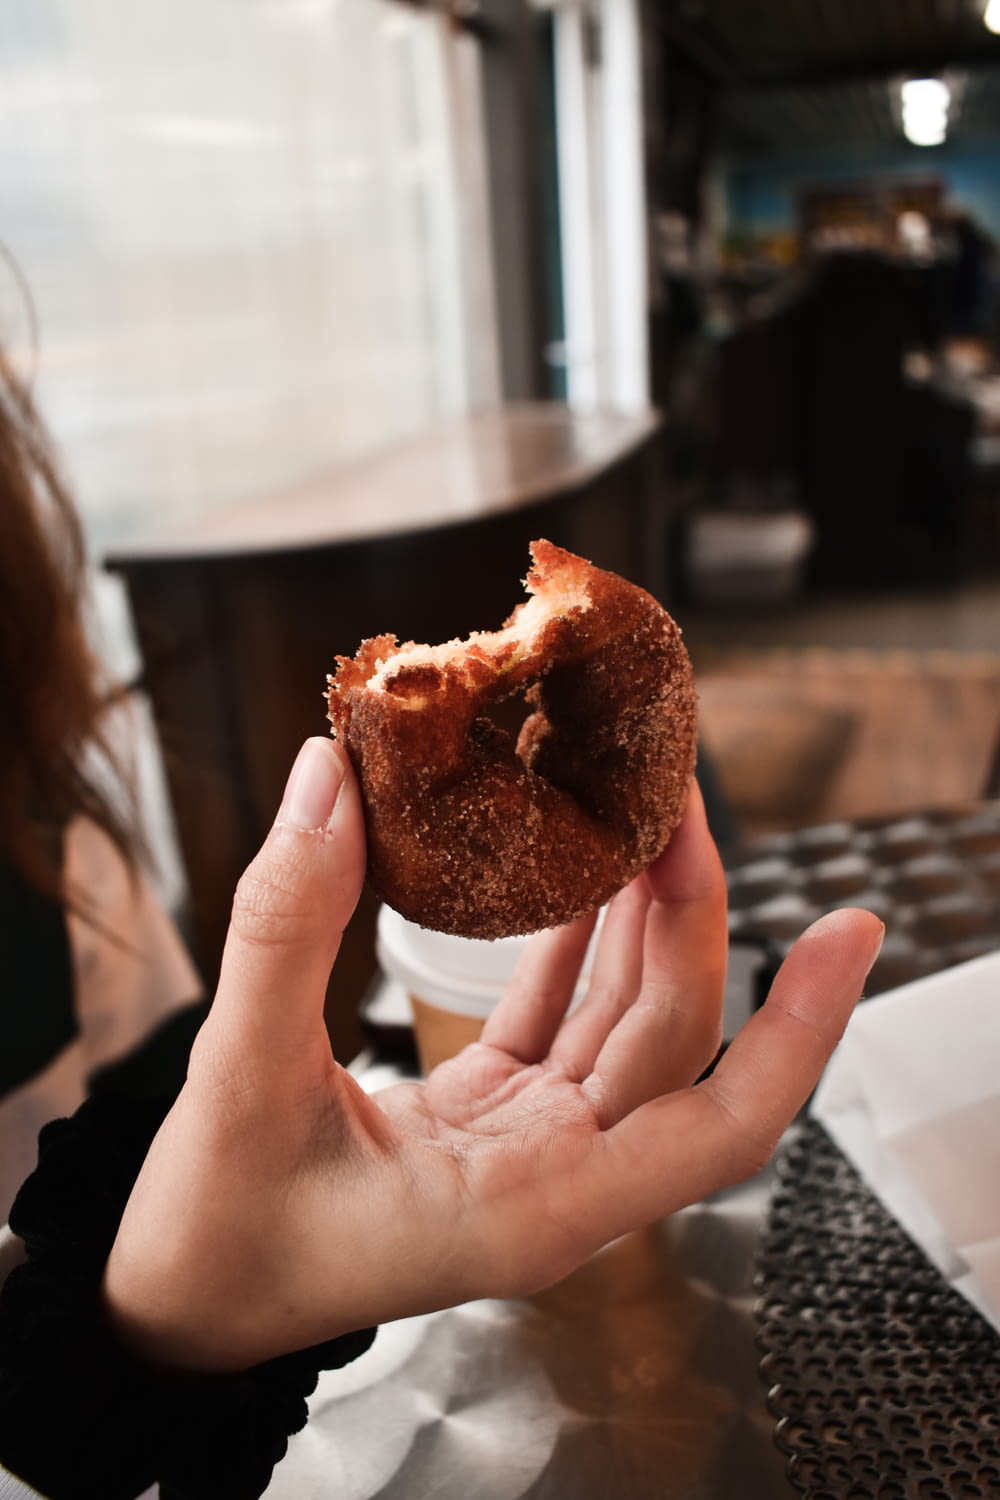 a person holding a half eaten doughnut in their hand